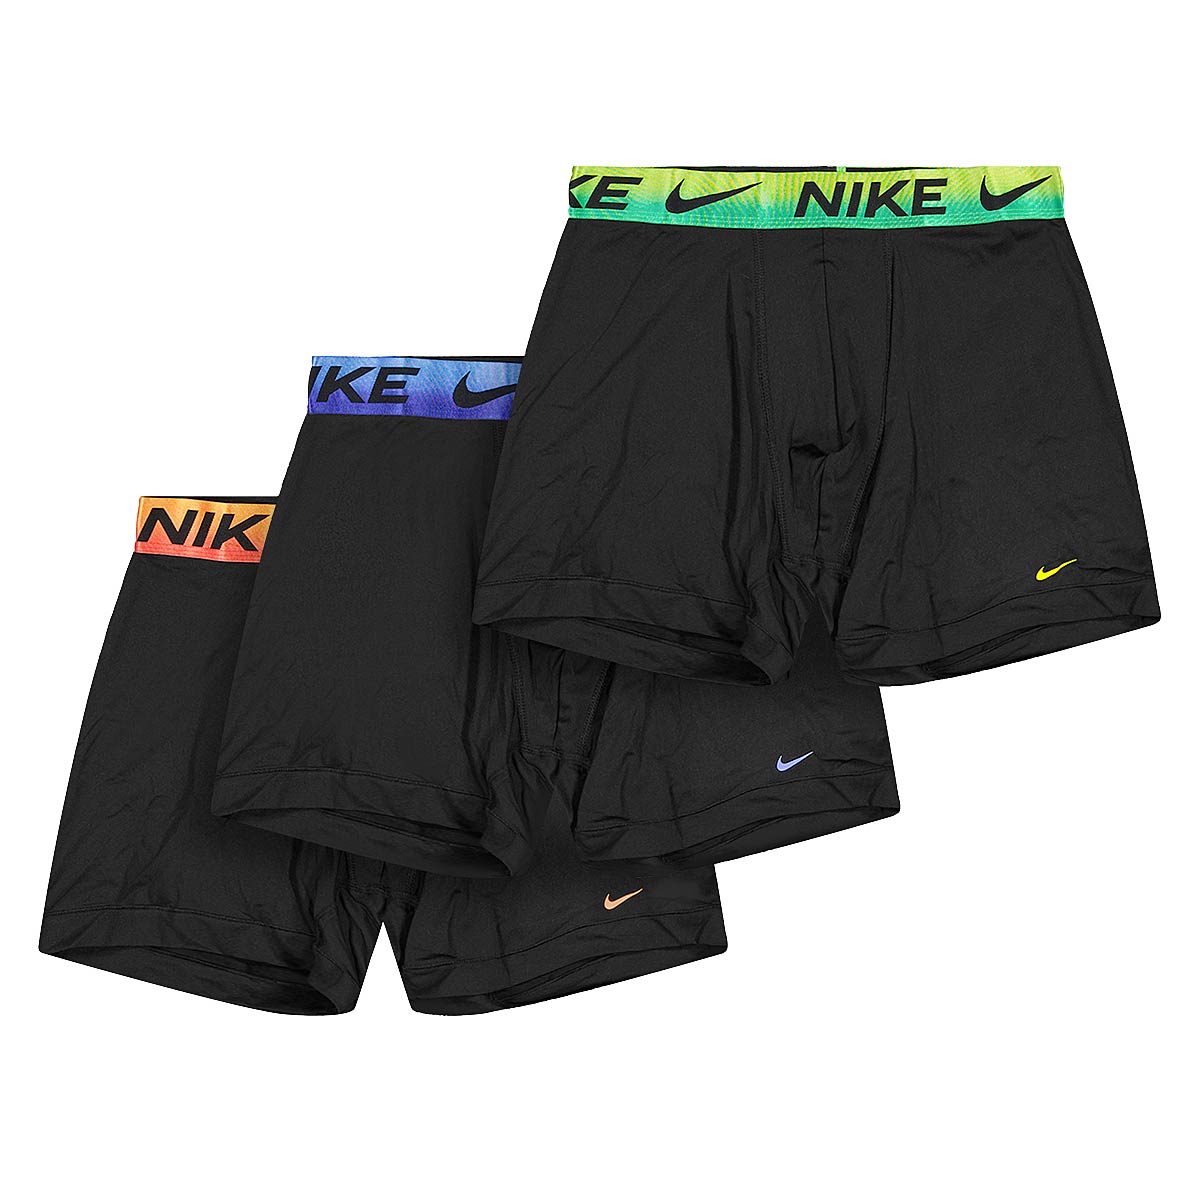 Image of Nike Boxer Brief 3pk, Green/white/grey